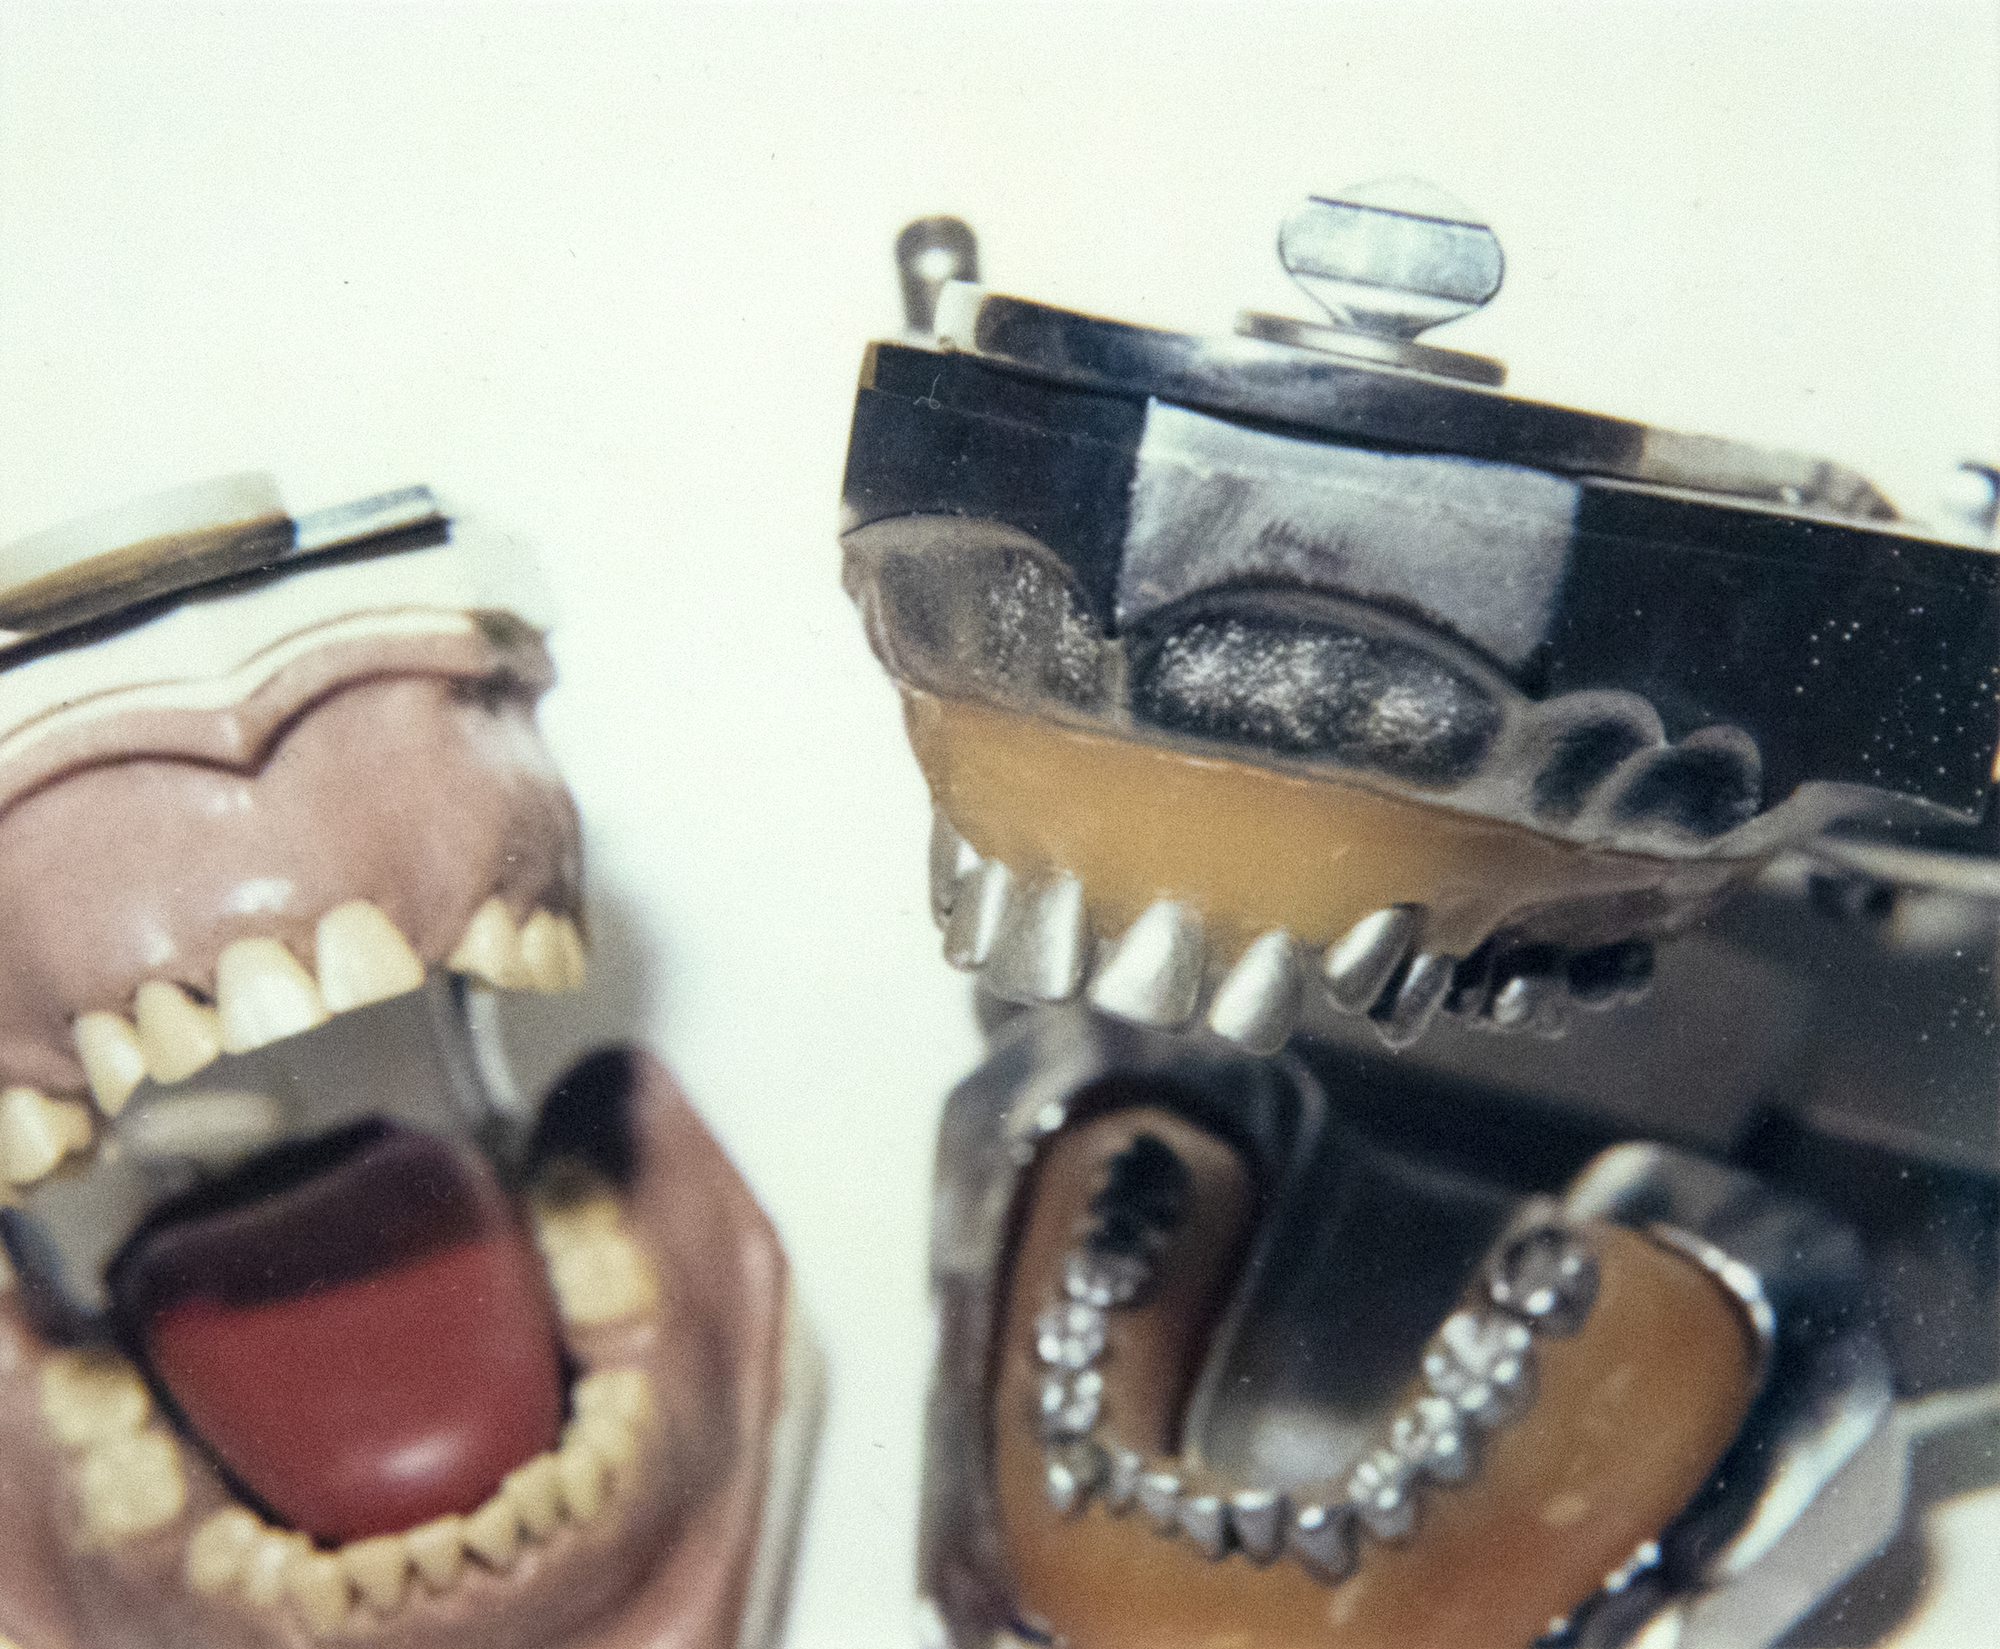 ANDY WARHOL - Moldes dentales - Polaroid, Polacolor - 3 3/8 x 4 1/4 in.